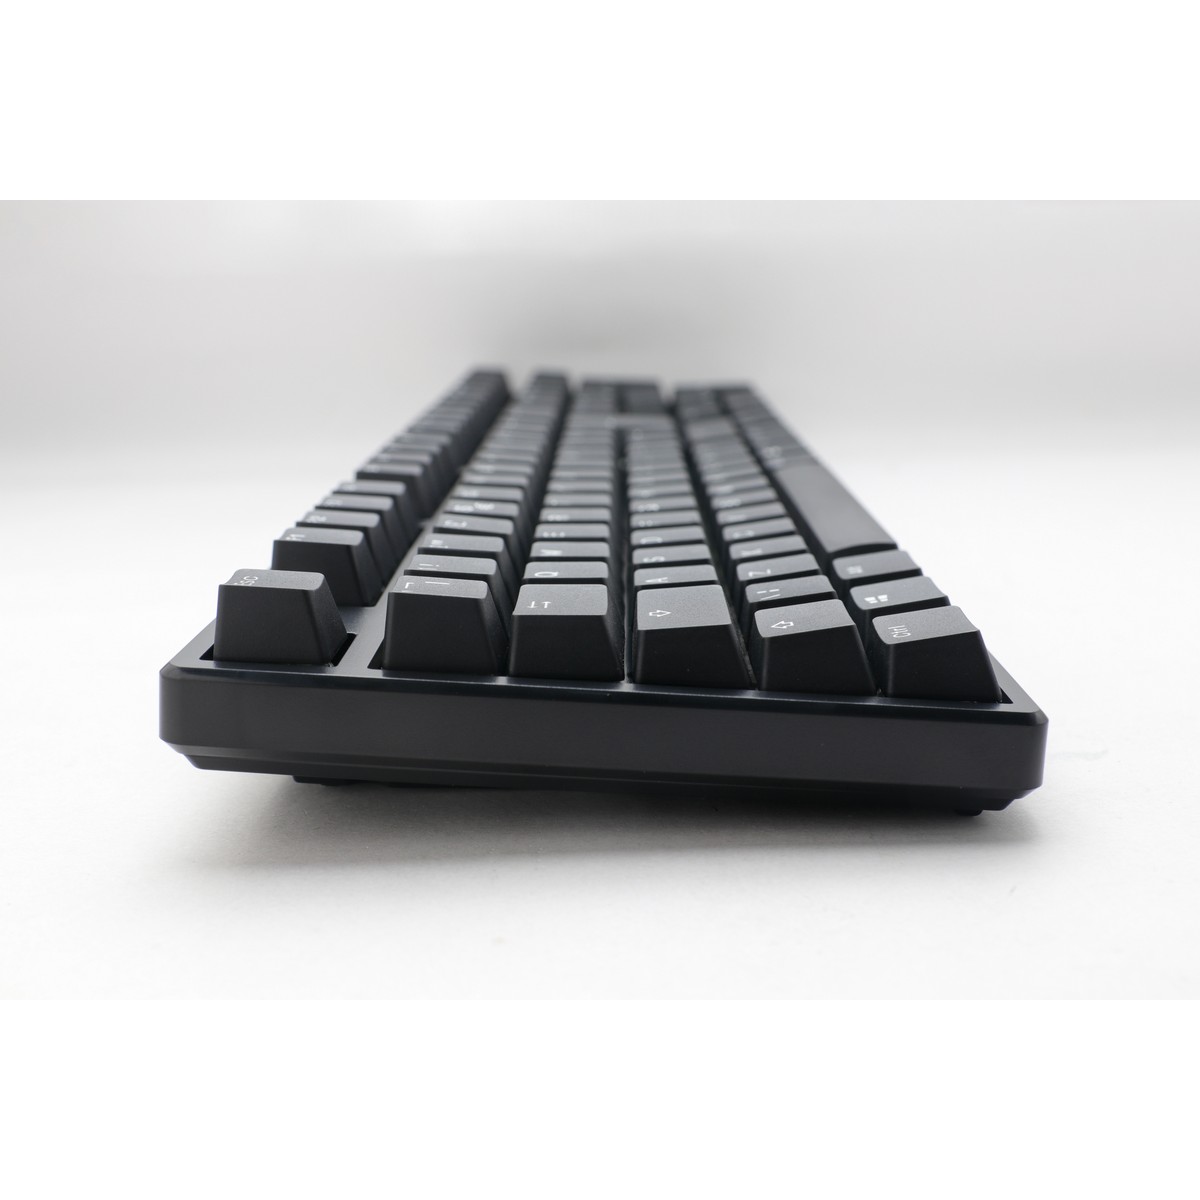 Ducky - Ducky Origin USB Mechanical Gaming Keyboard Cherry MX Speed Silver - Black UK Lay